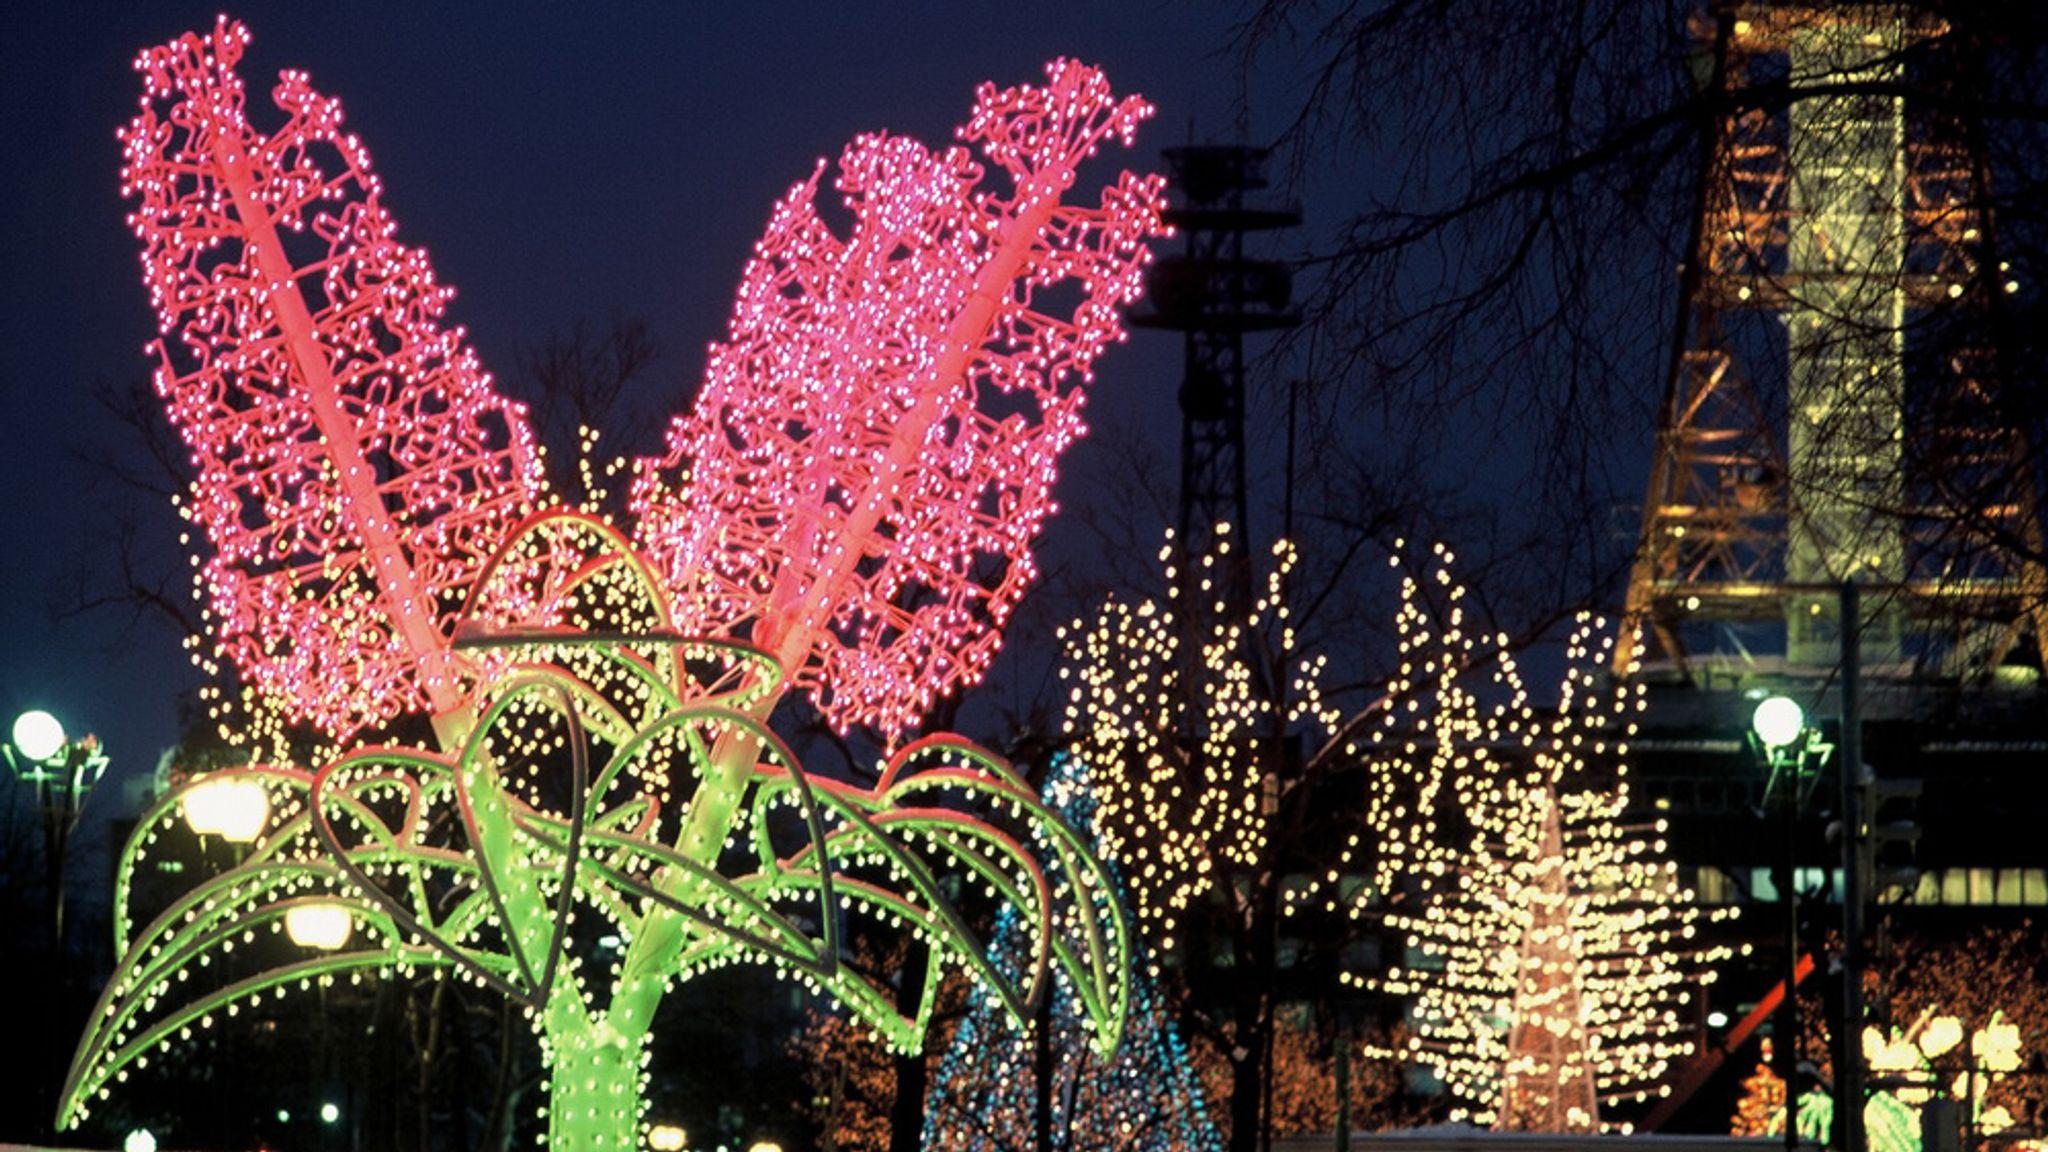 Light decorations during the Sapporo White Illumination